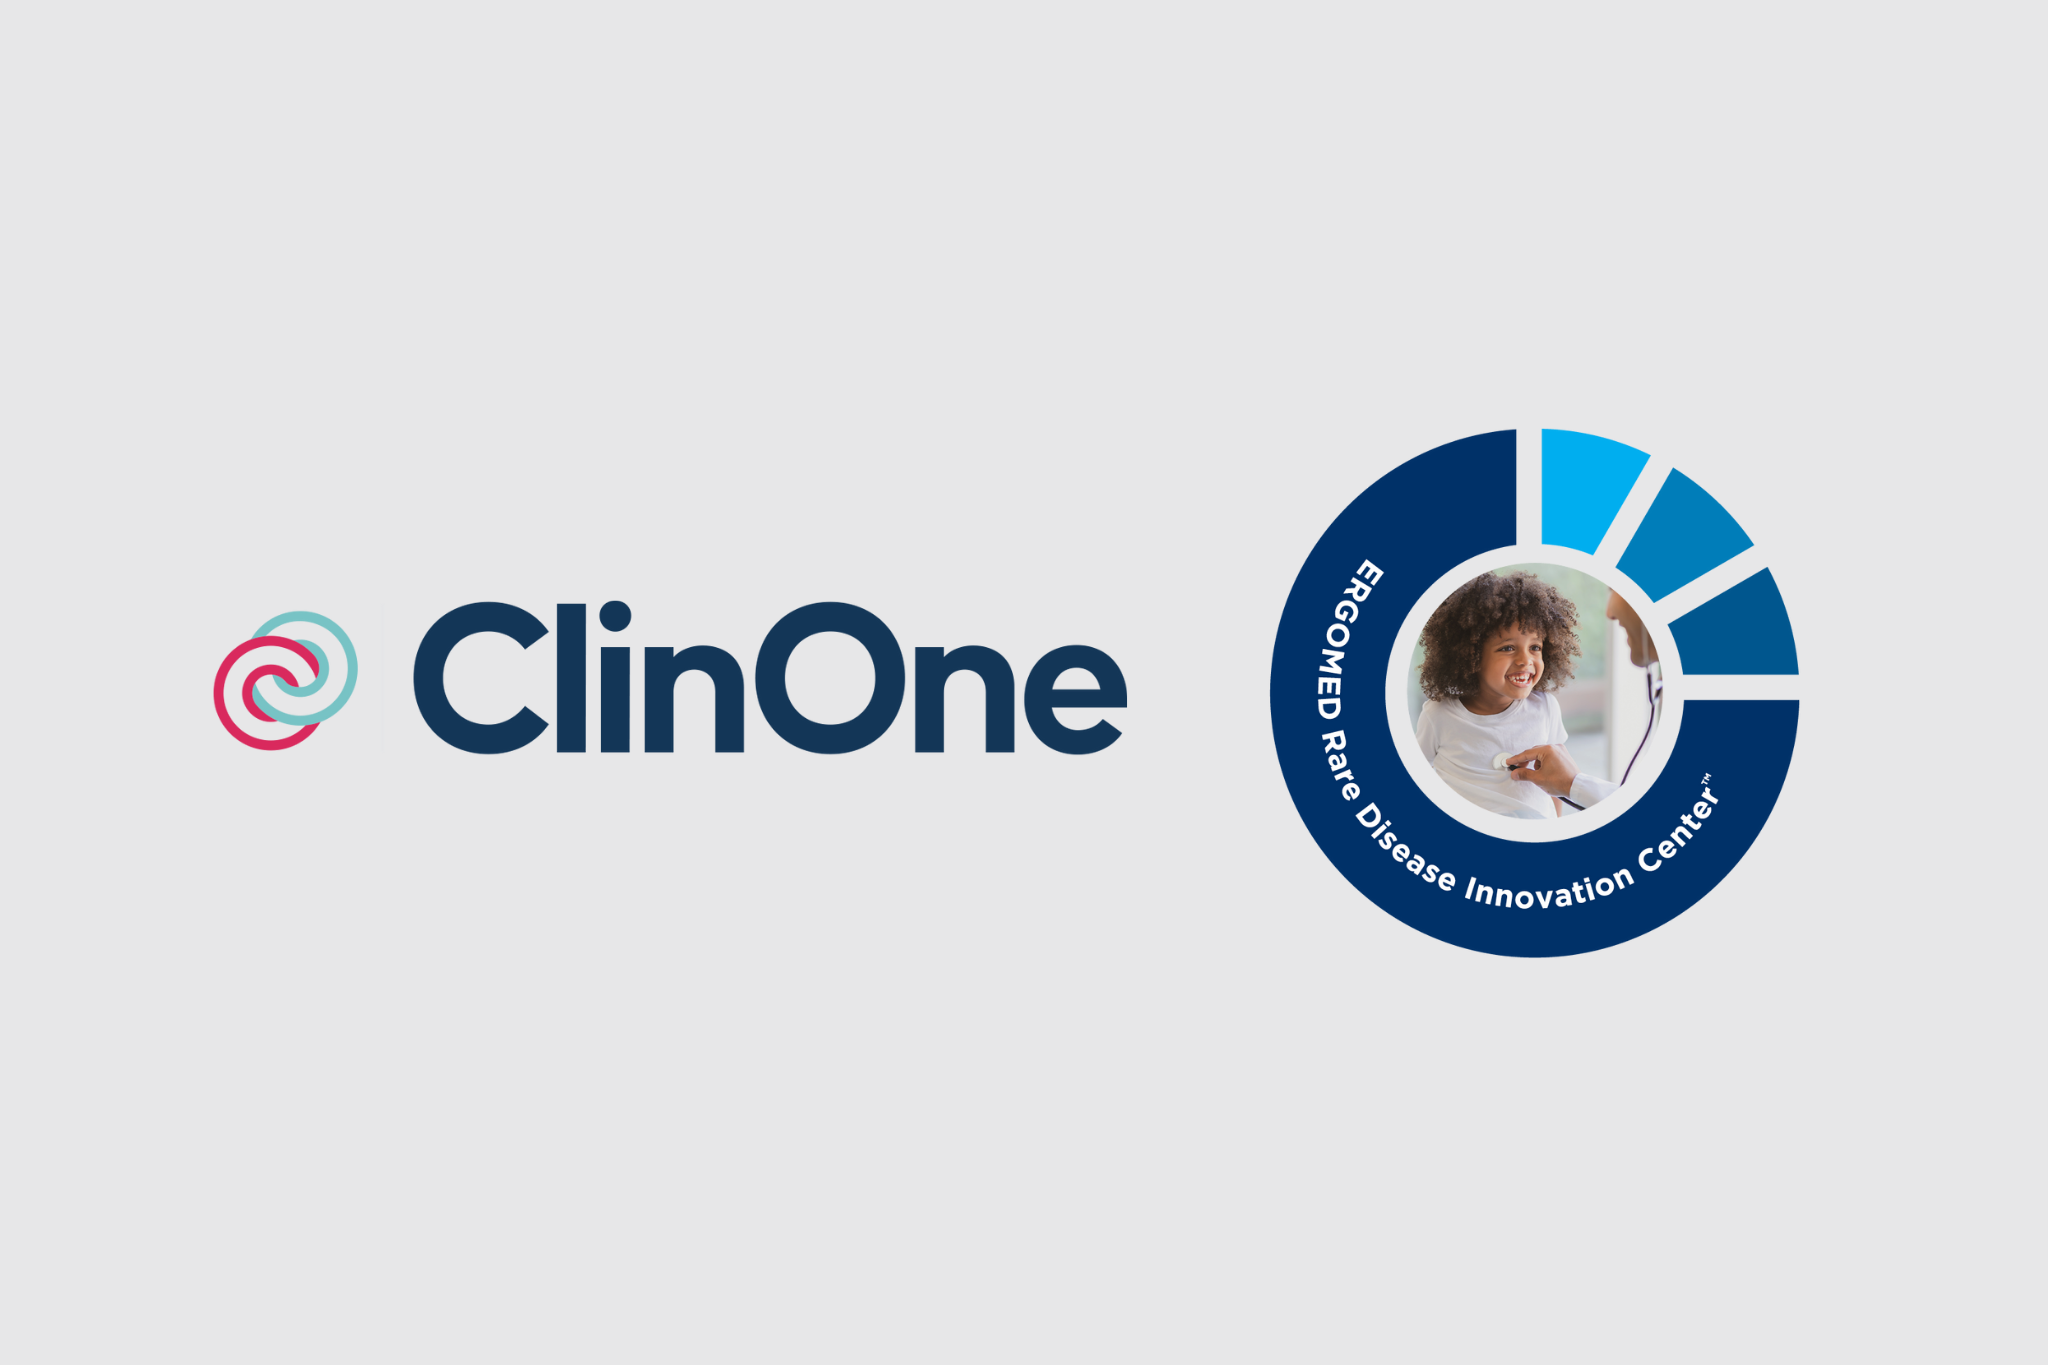 ClinOne circles